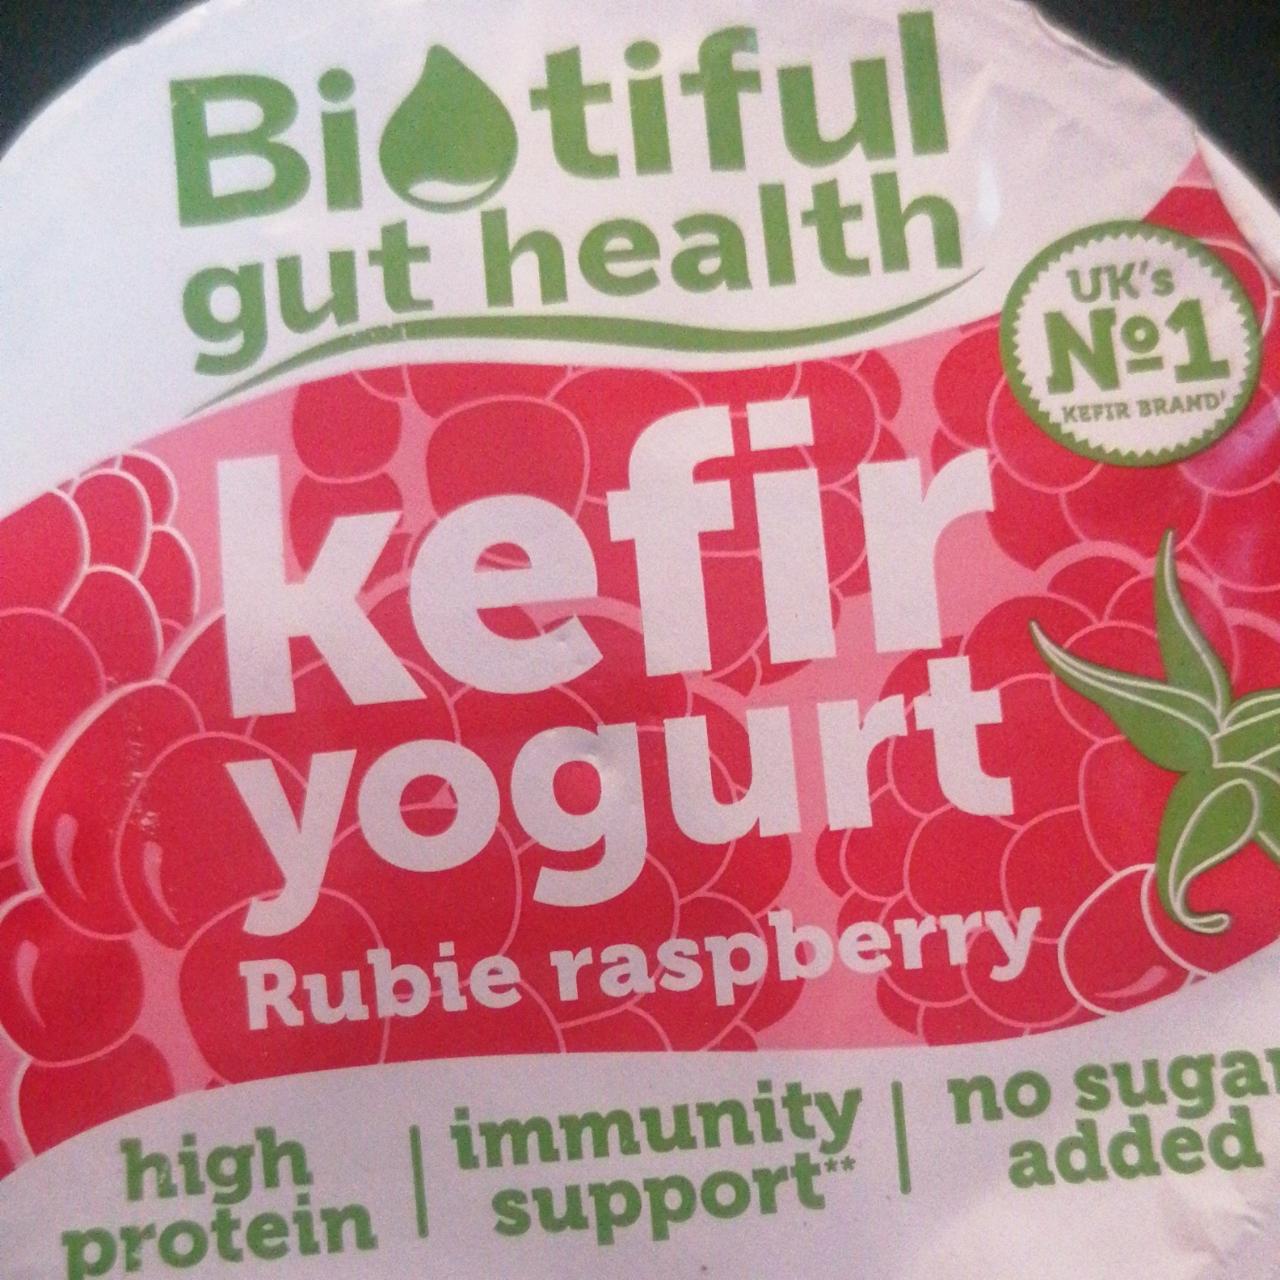 Fotografie - Kefir yogurt rubie raspberry Biotiful gut health